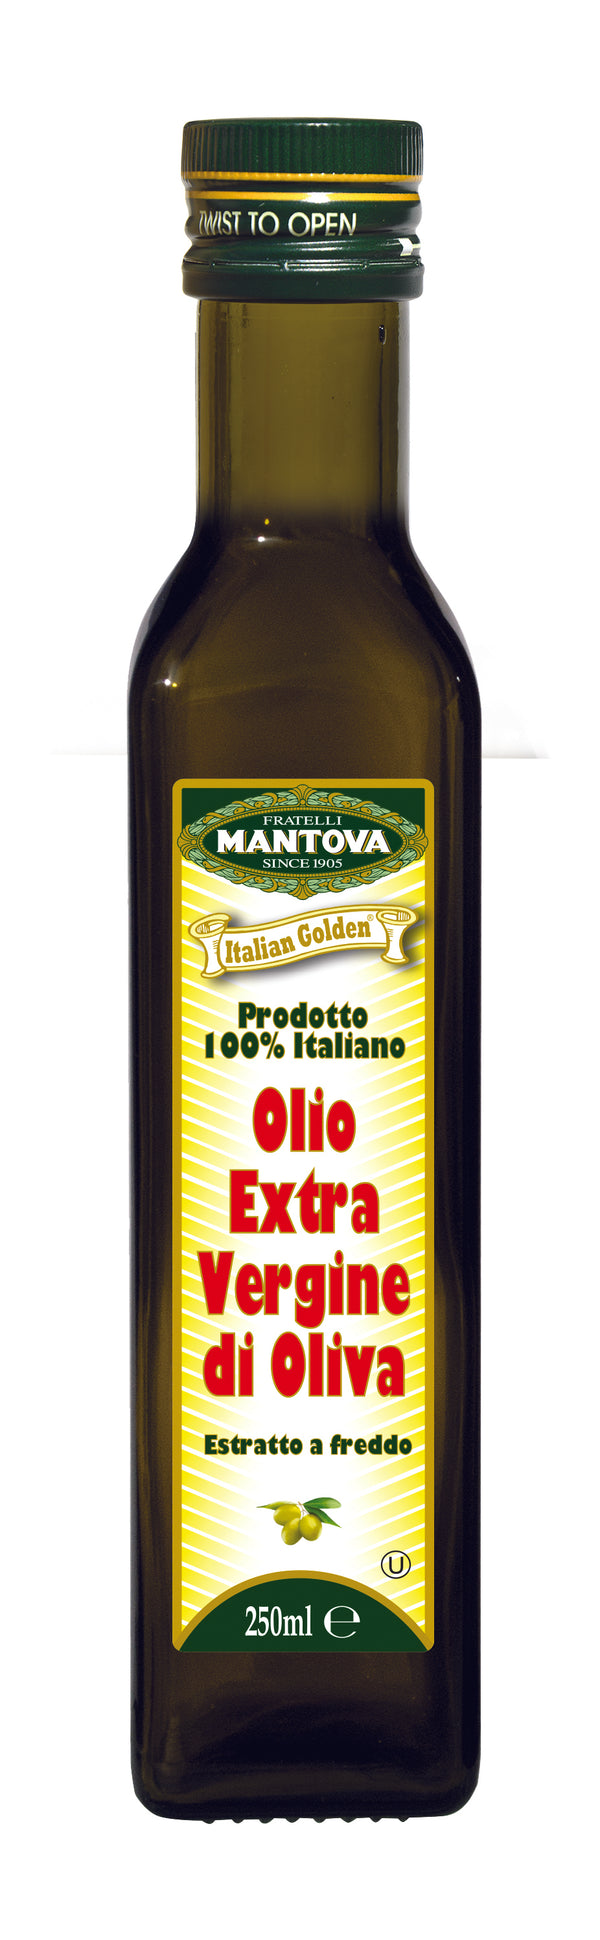 Mantova Extra Virgin Olive Oil Golden 250 ml